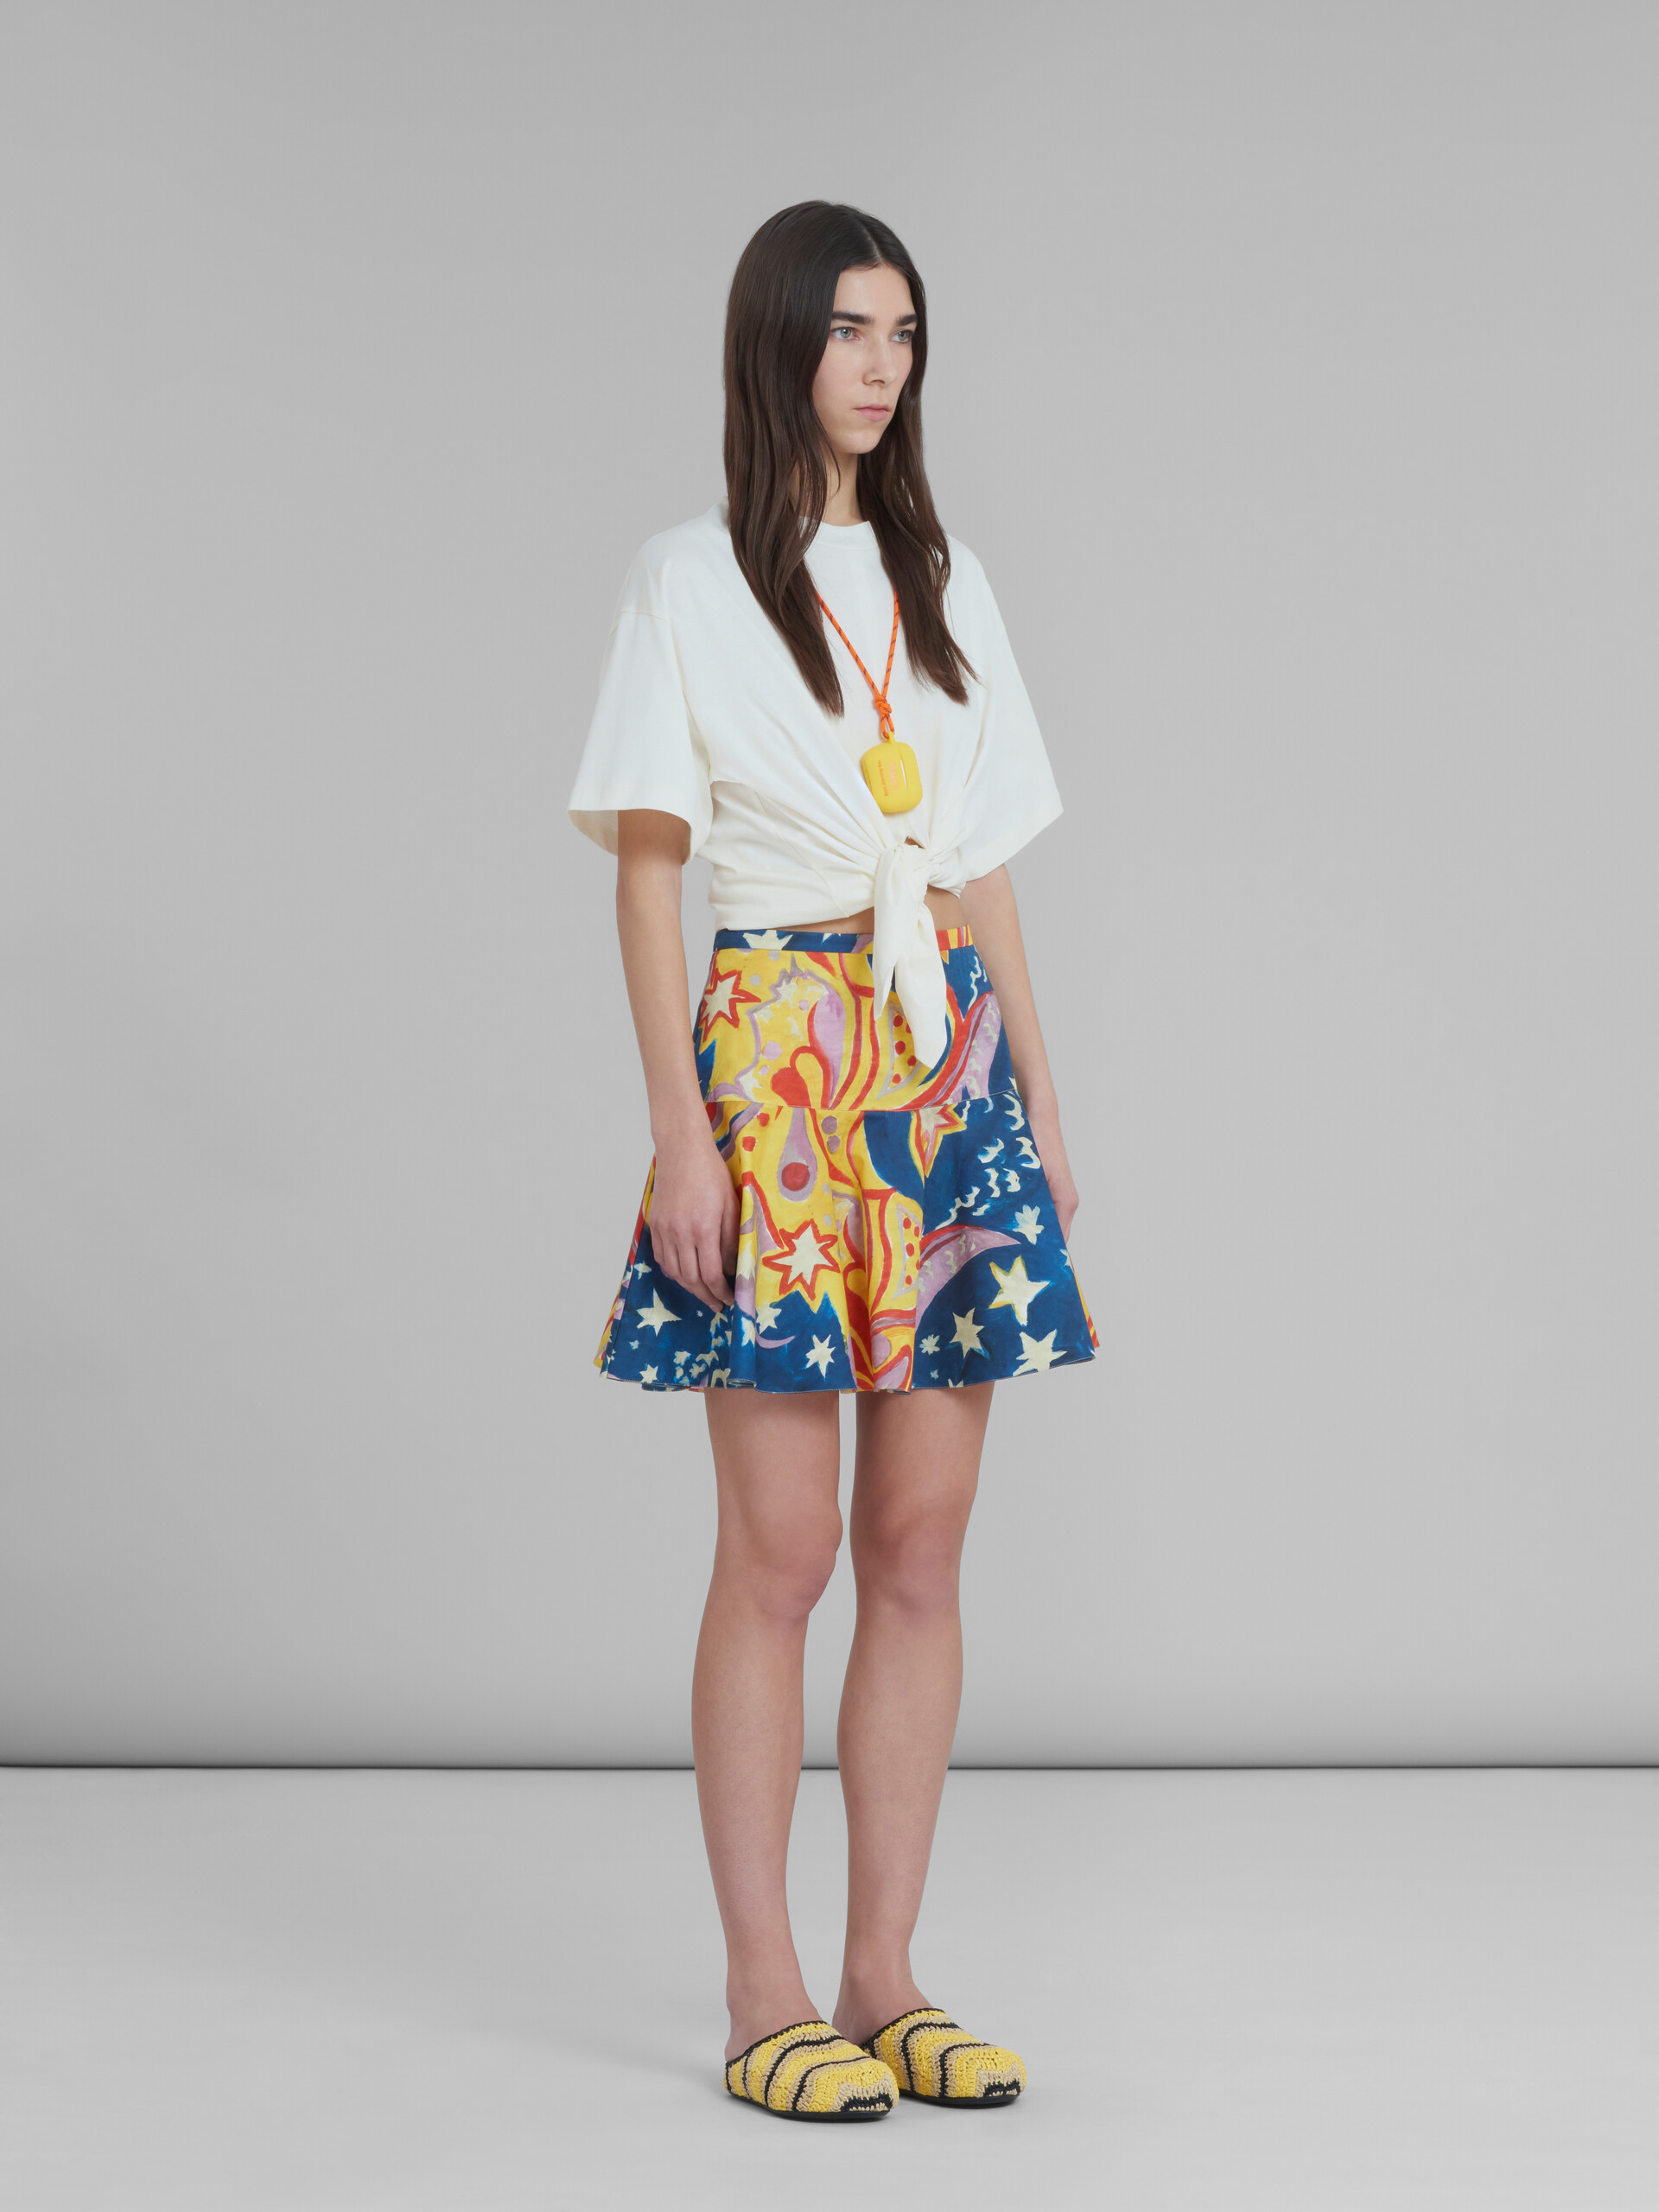 Marni x No Vacancy Inn - Cotton flounce skirt with Galactic Paradise print - Skirts - Image 5